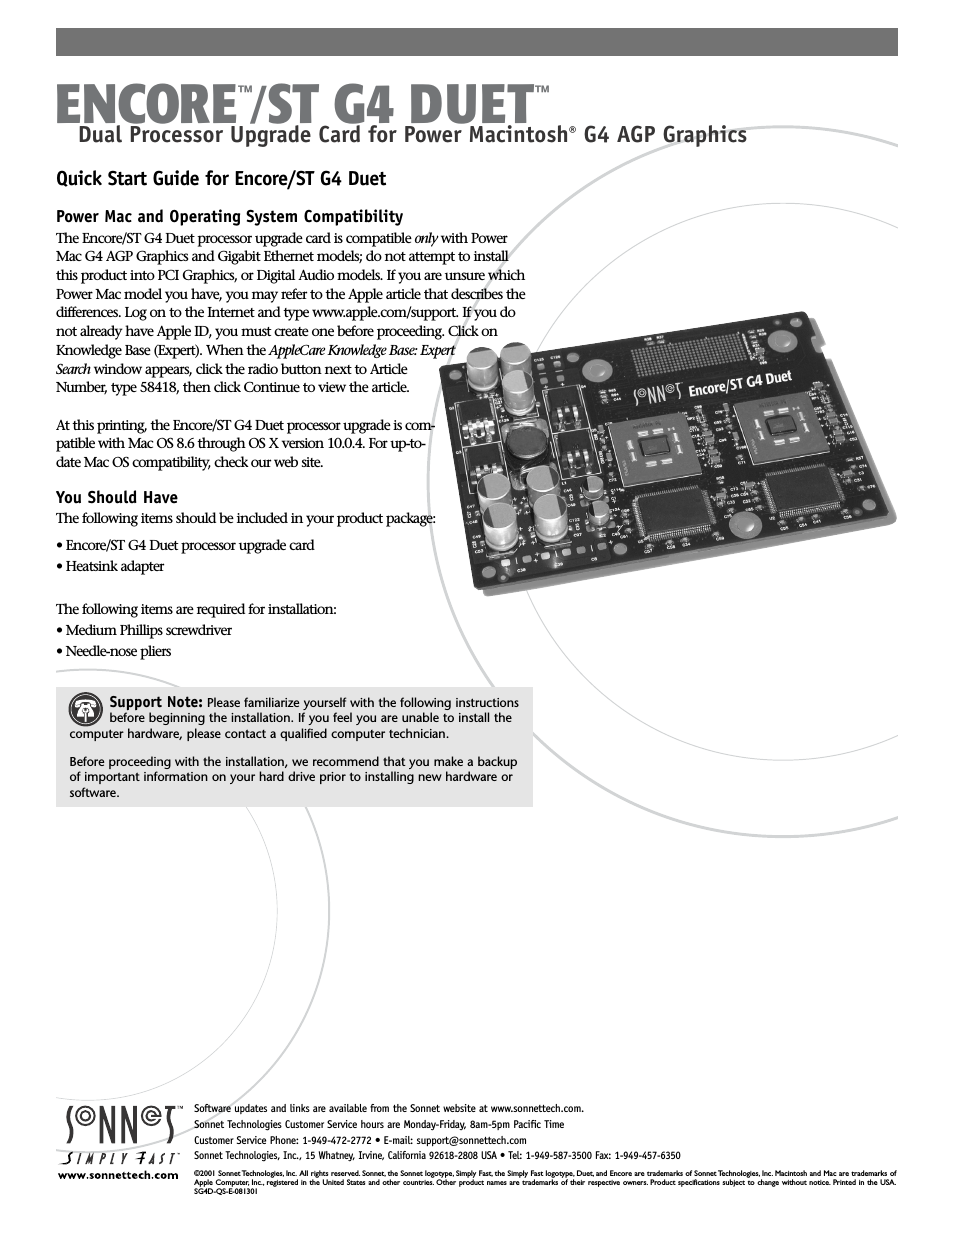 Encore_ST G4 Duet (With No Heatsink) Processor Upgrade Card